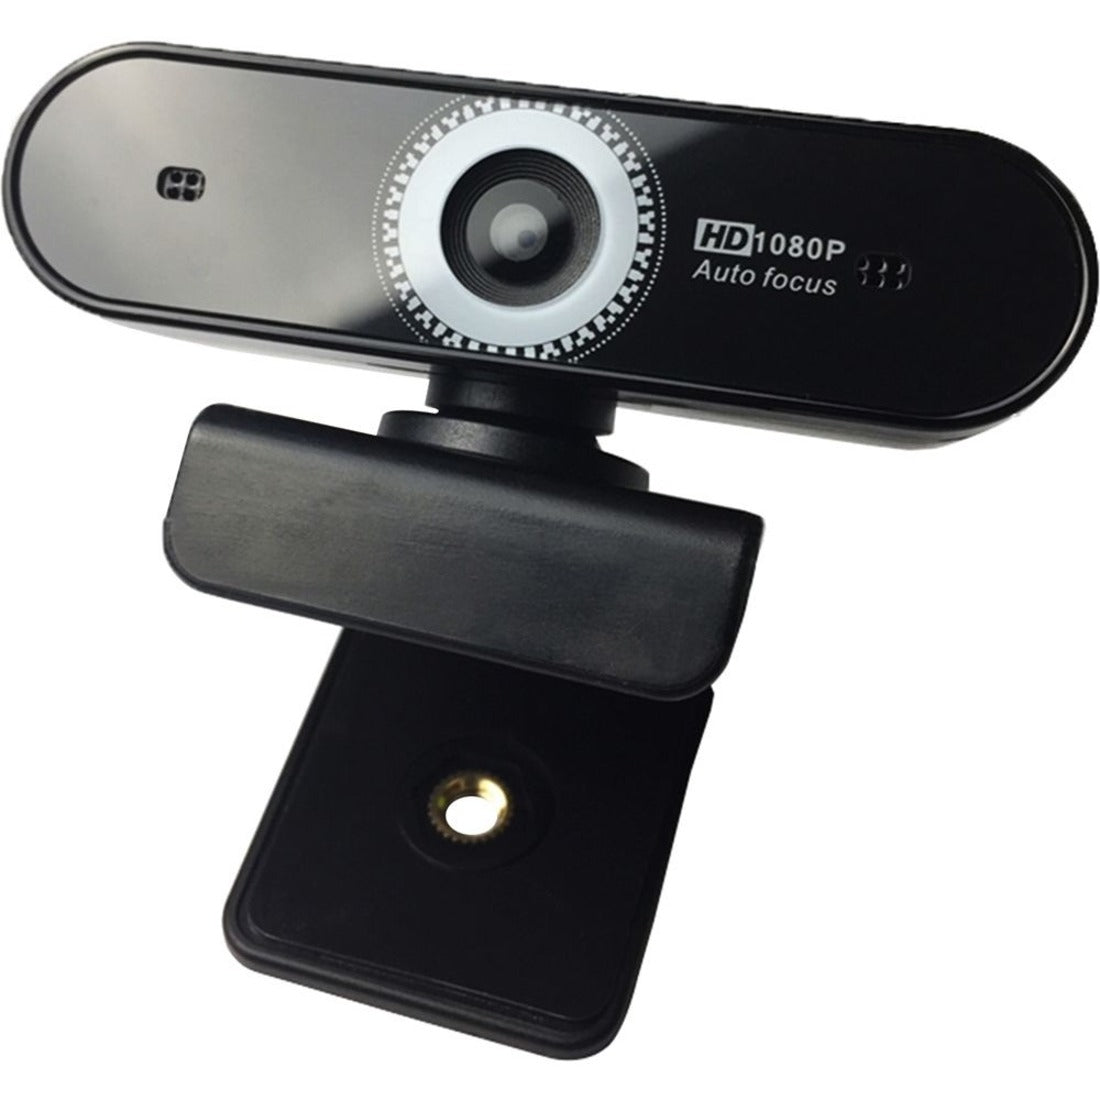 Azulle L-4001 Autofocus 1080P HDR WebCam with Microphone, 2 Megapixel, 30 fps, USB 2.0